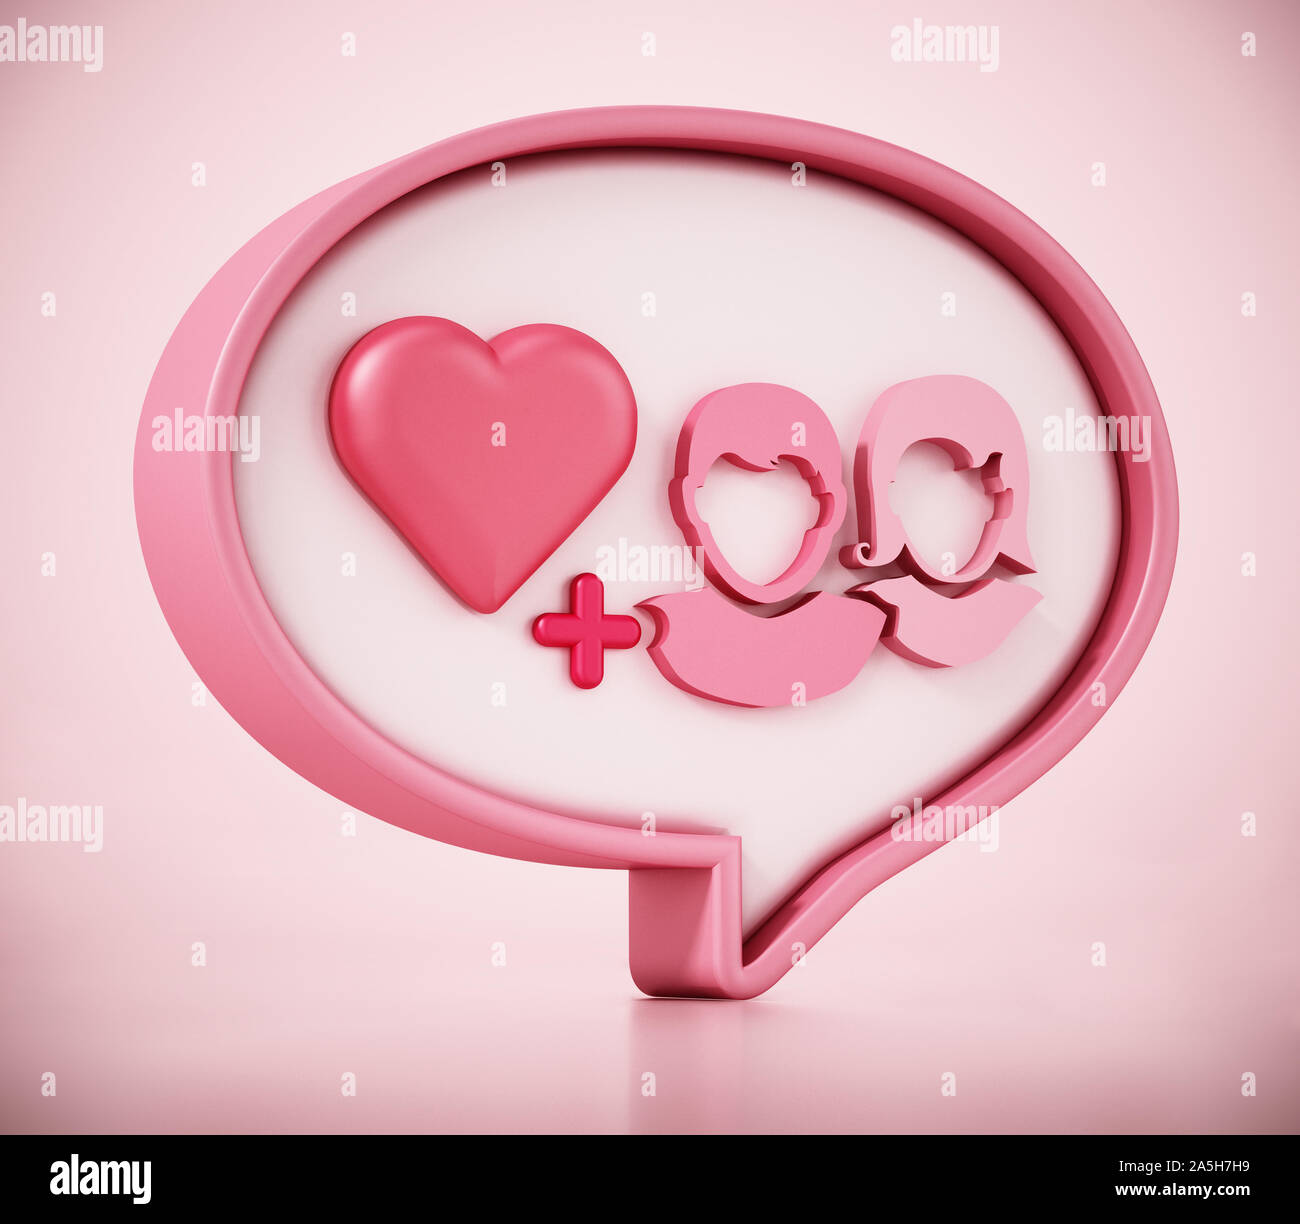 Speech balloon with heart and people symbols on it. 3D illustration. Stock Photo